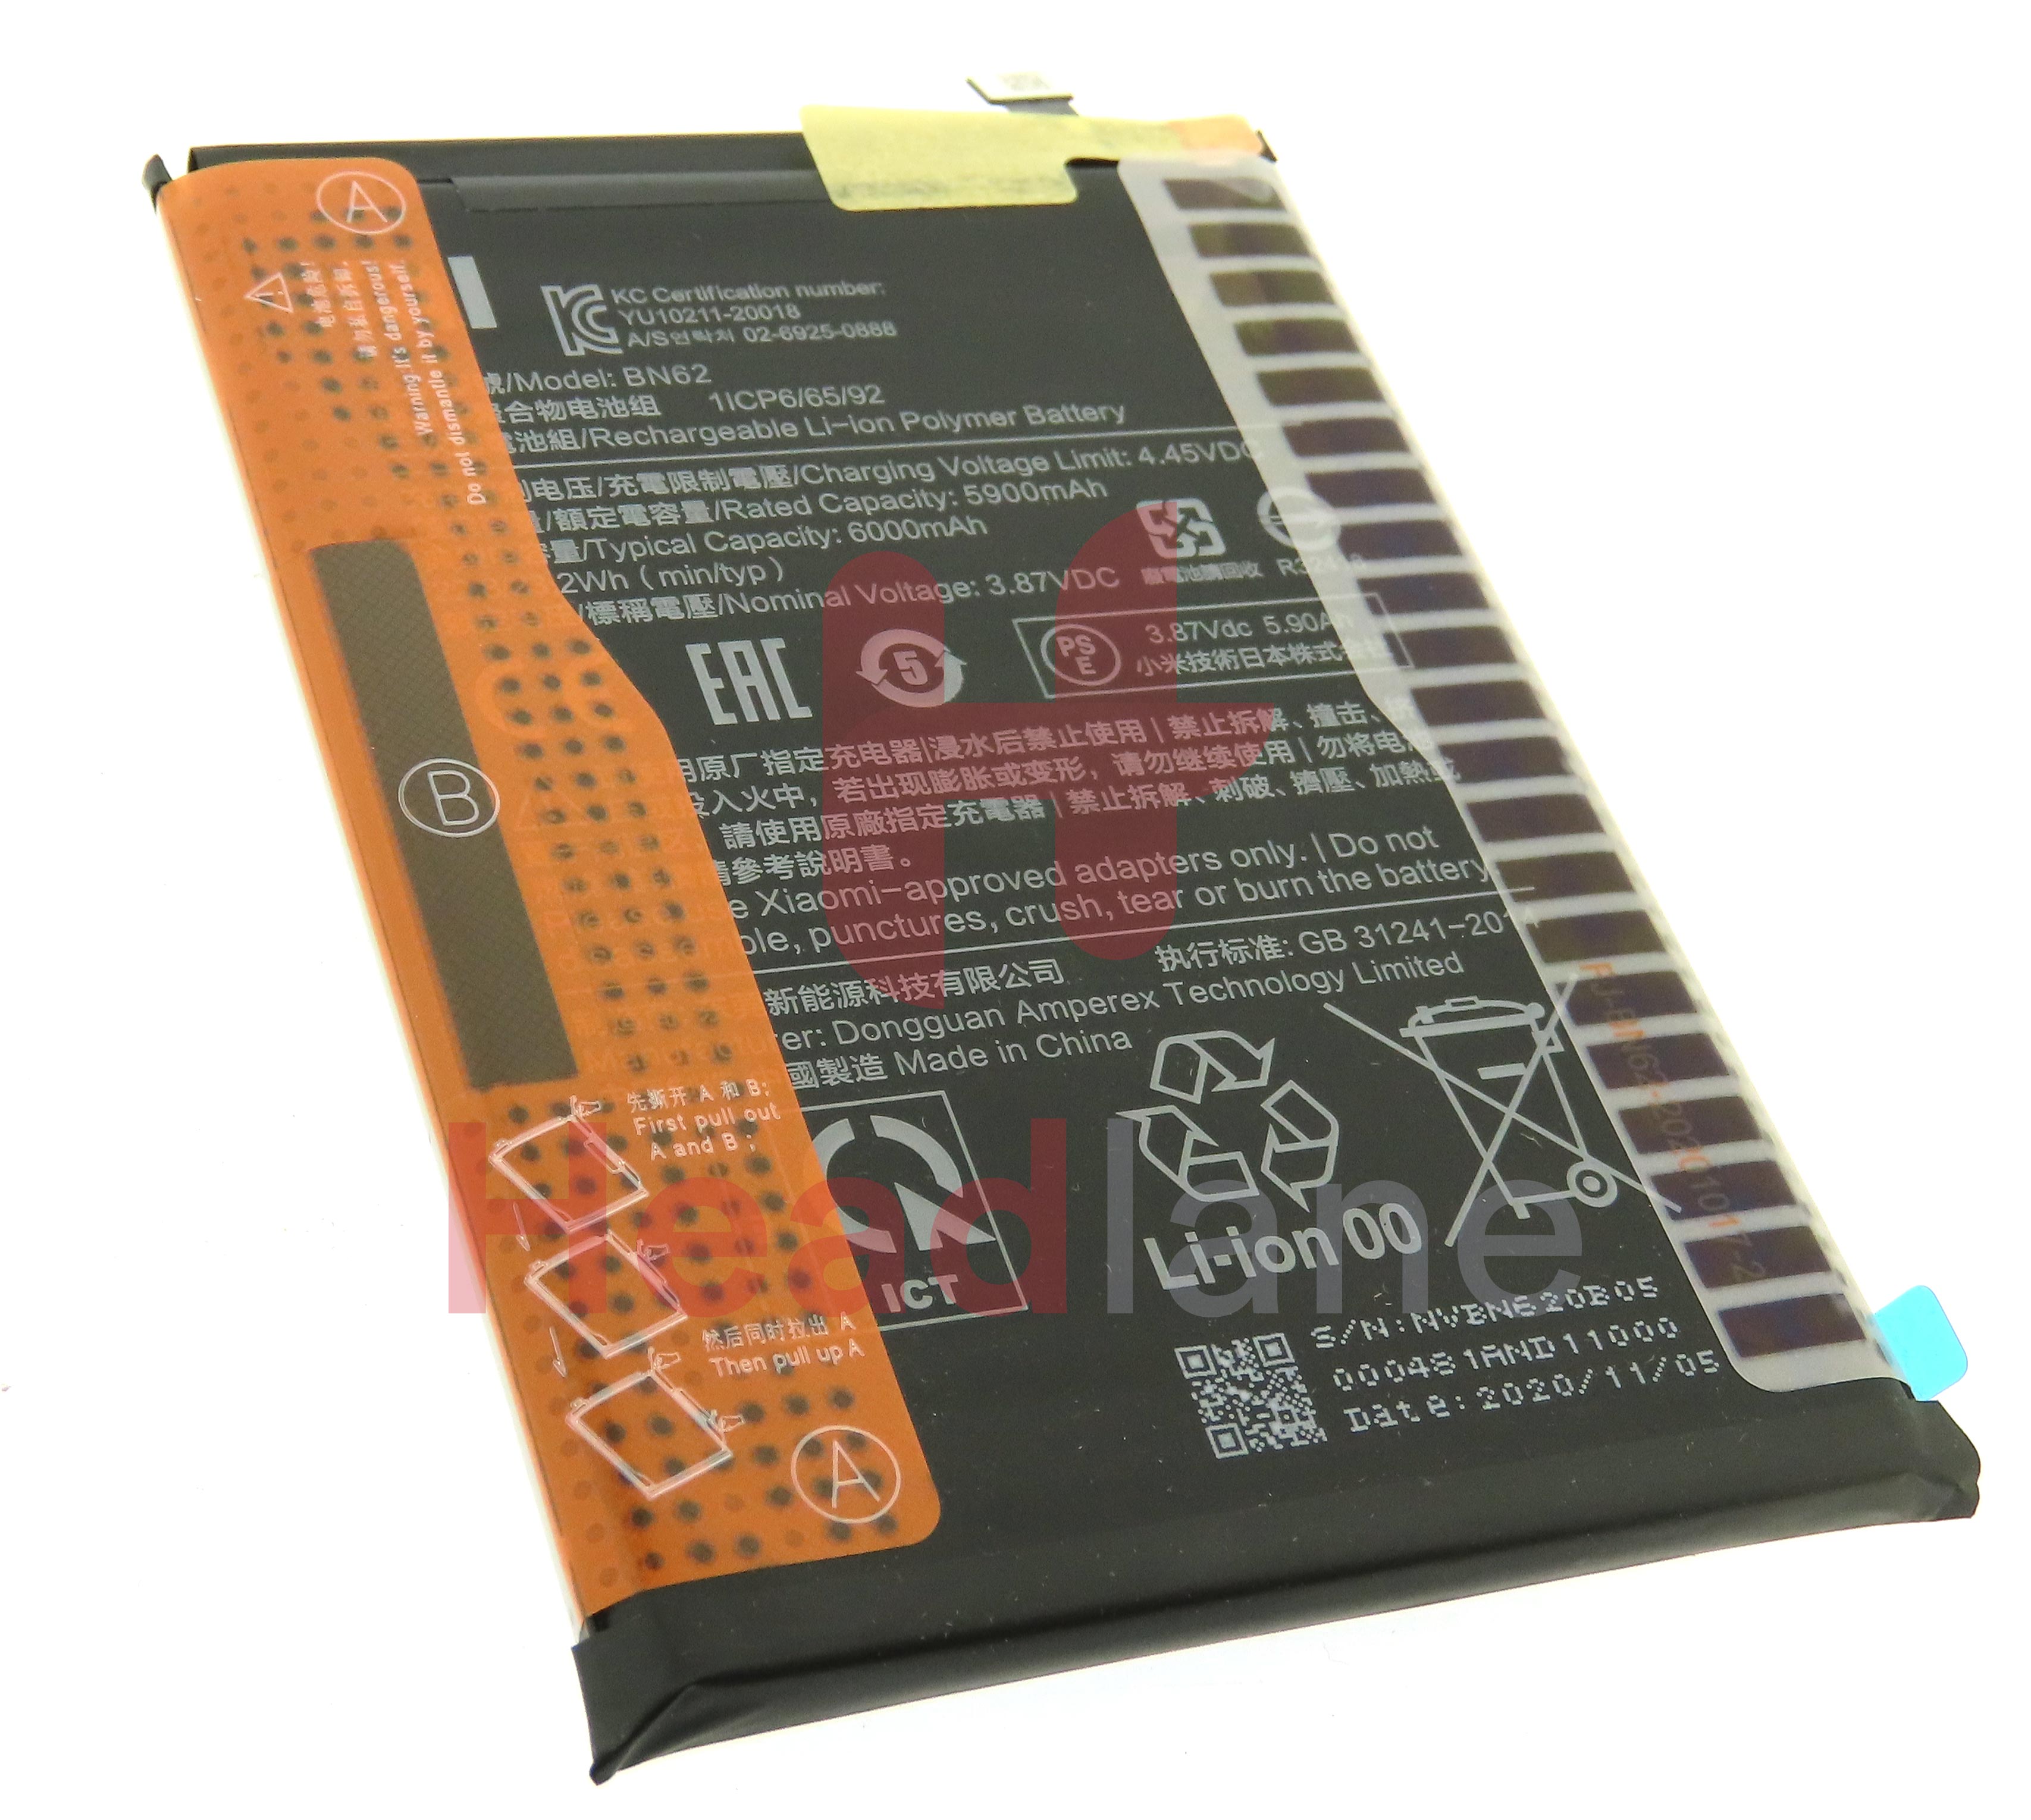 Xiaomi Redmi 9T BN62 6000mAh Battery